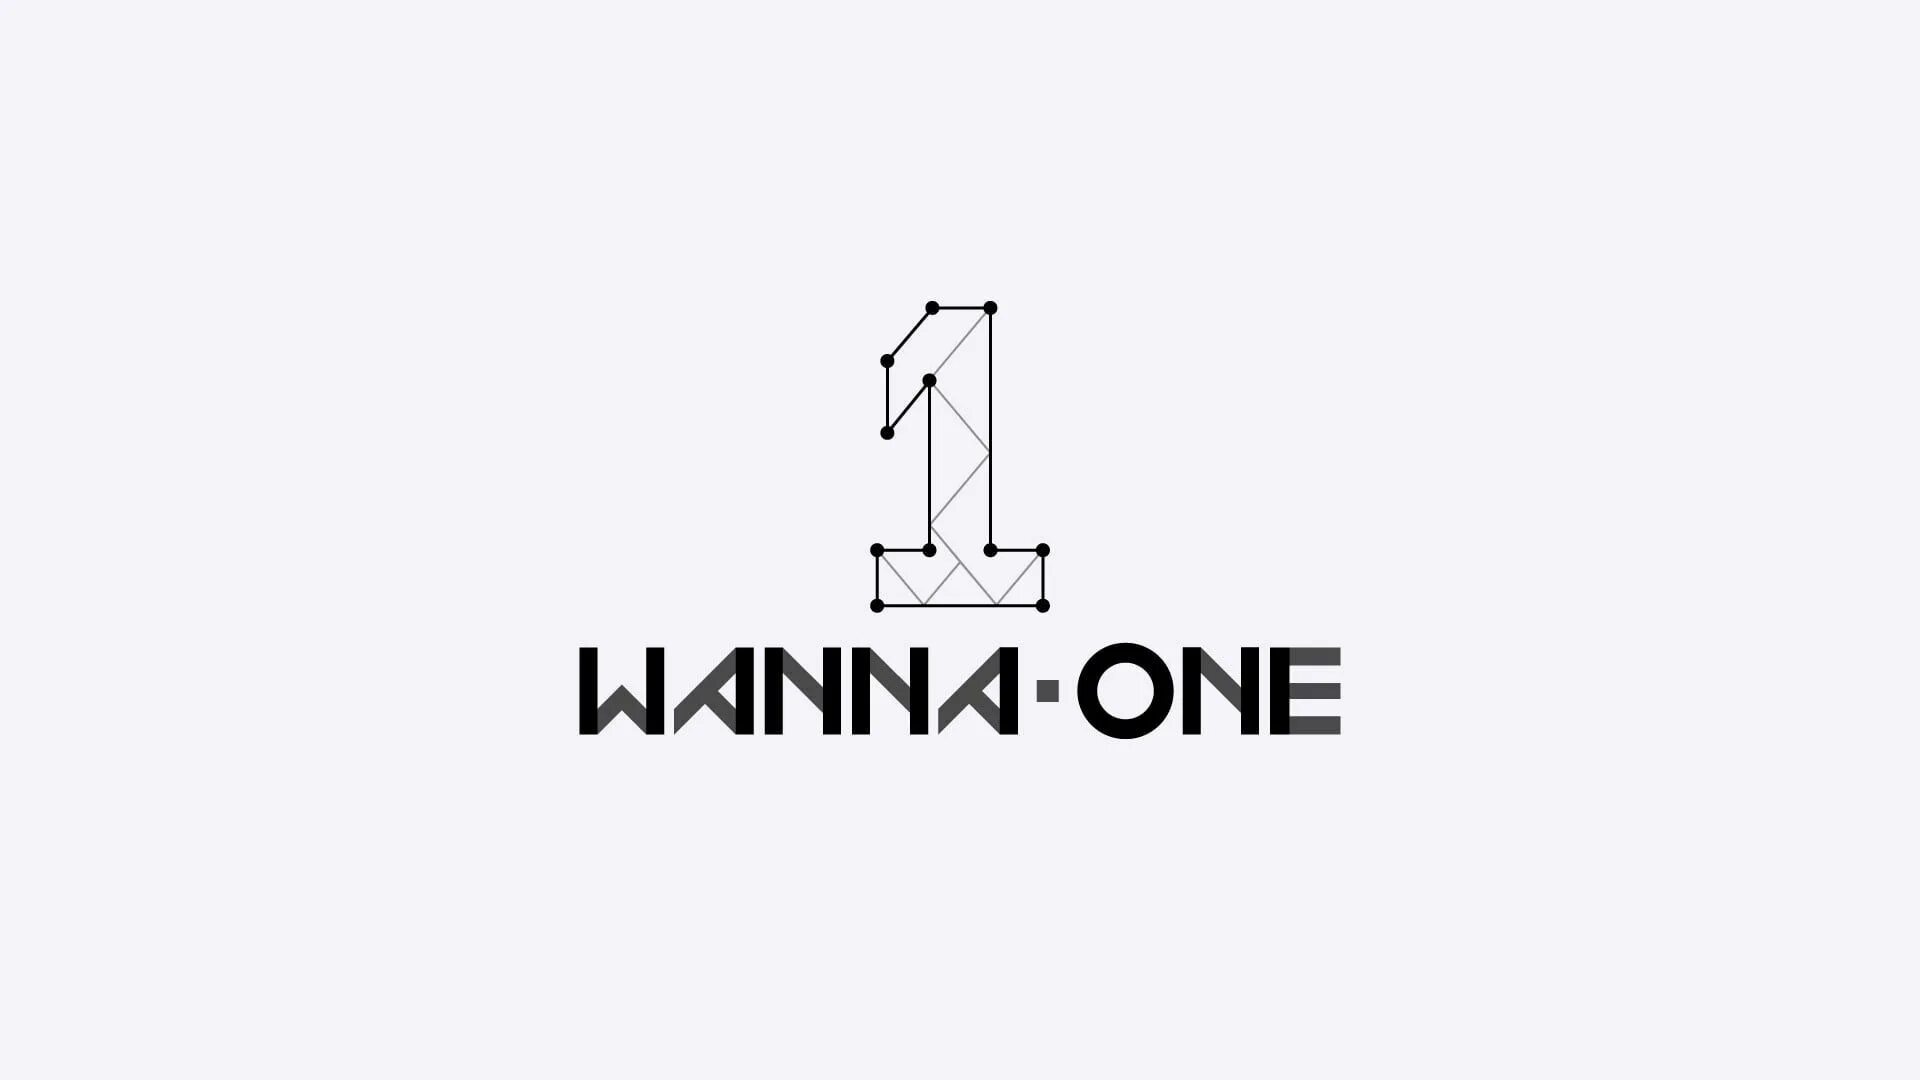 Wan n. Логотип one. Wanna one logo. Wanna one корейская группа. Wanna надпись.